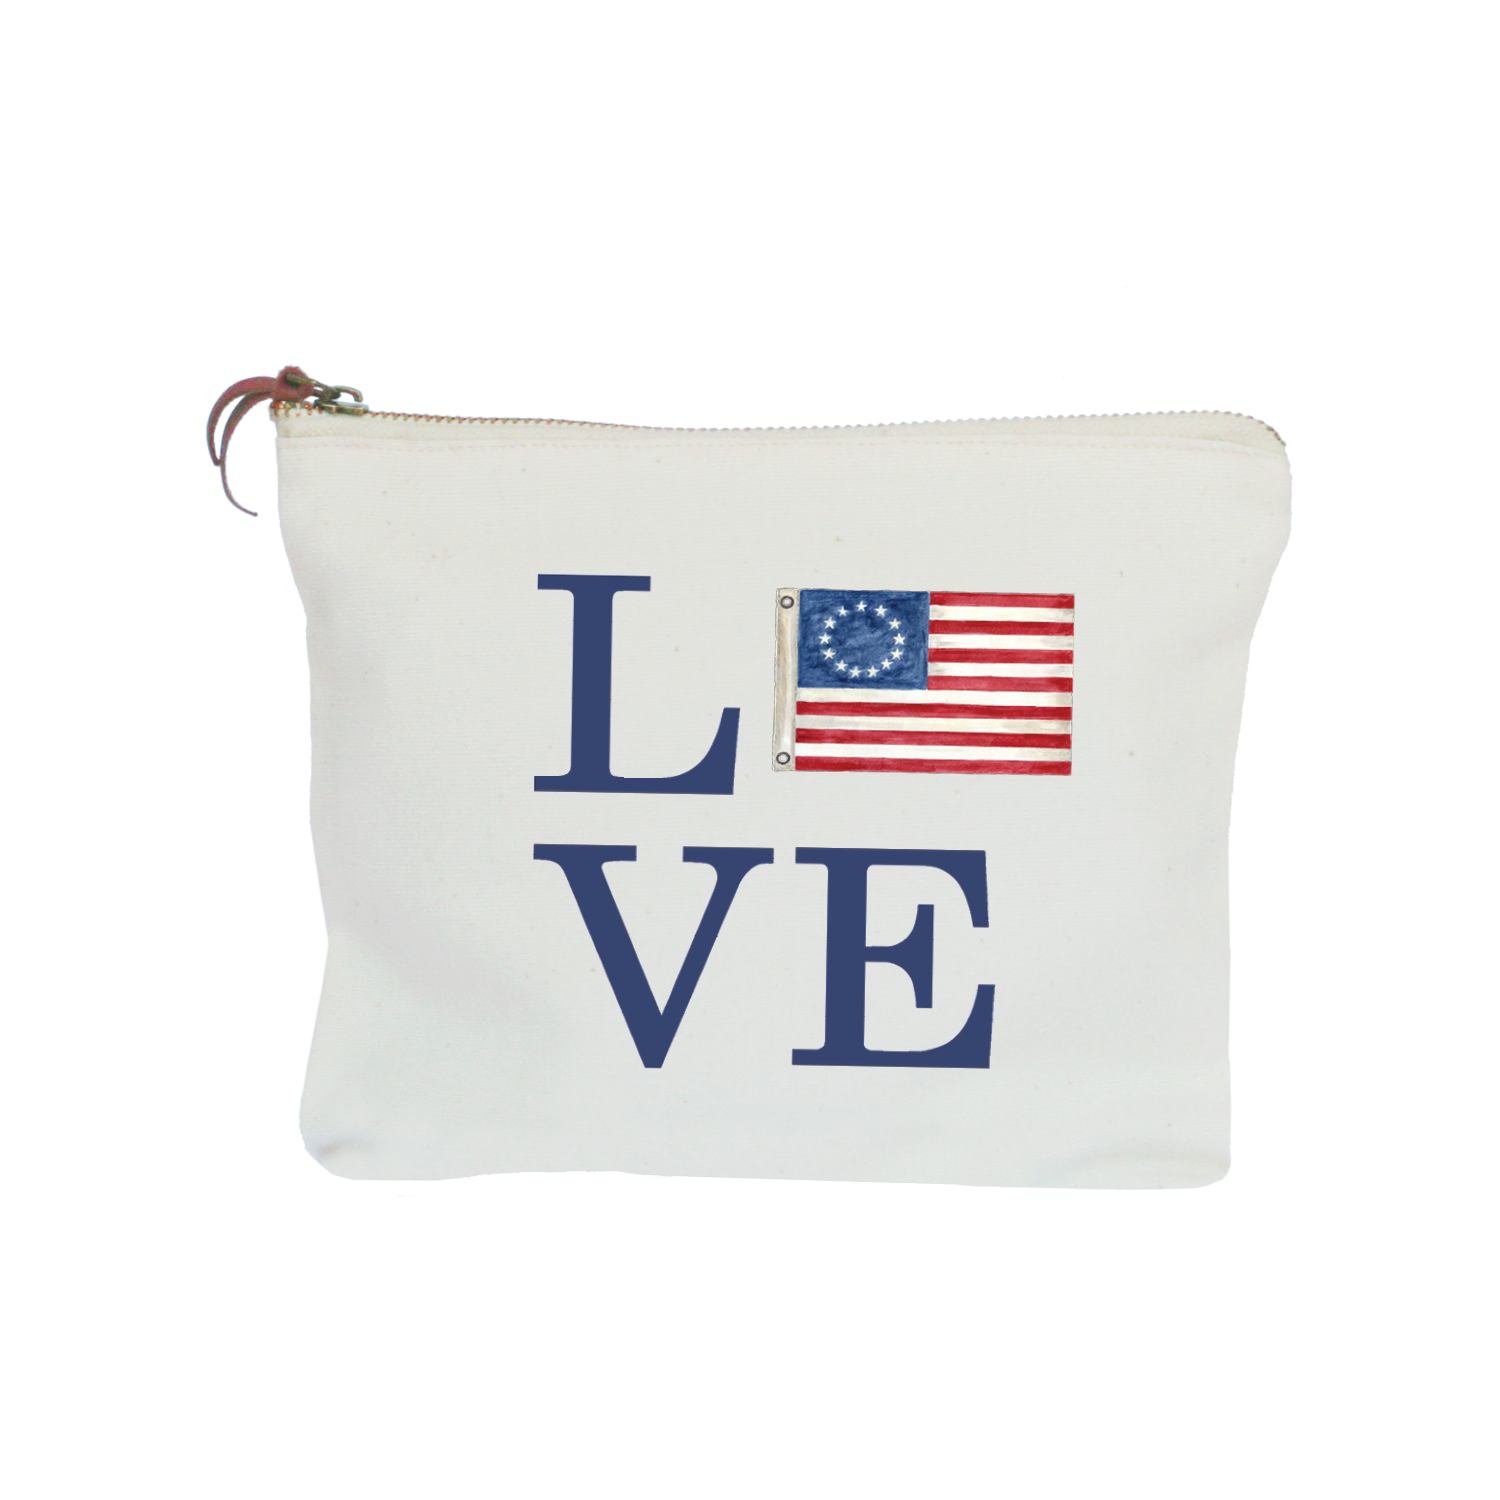 love US flag zipper pouch